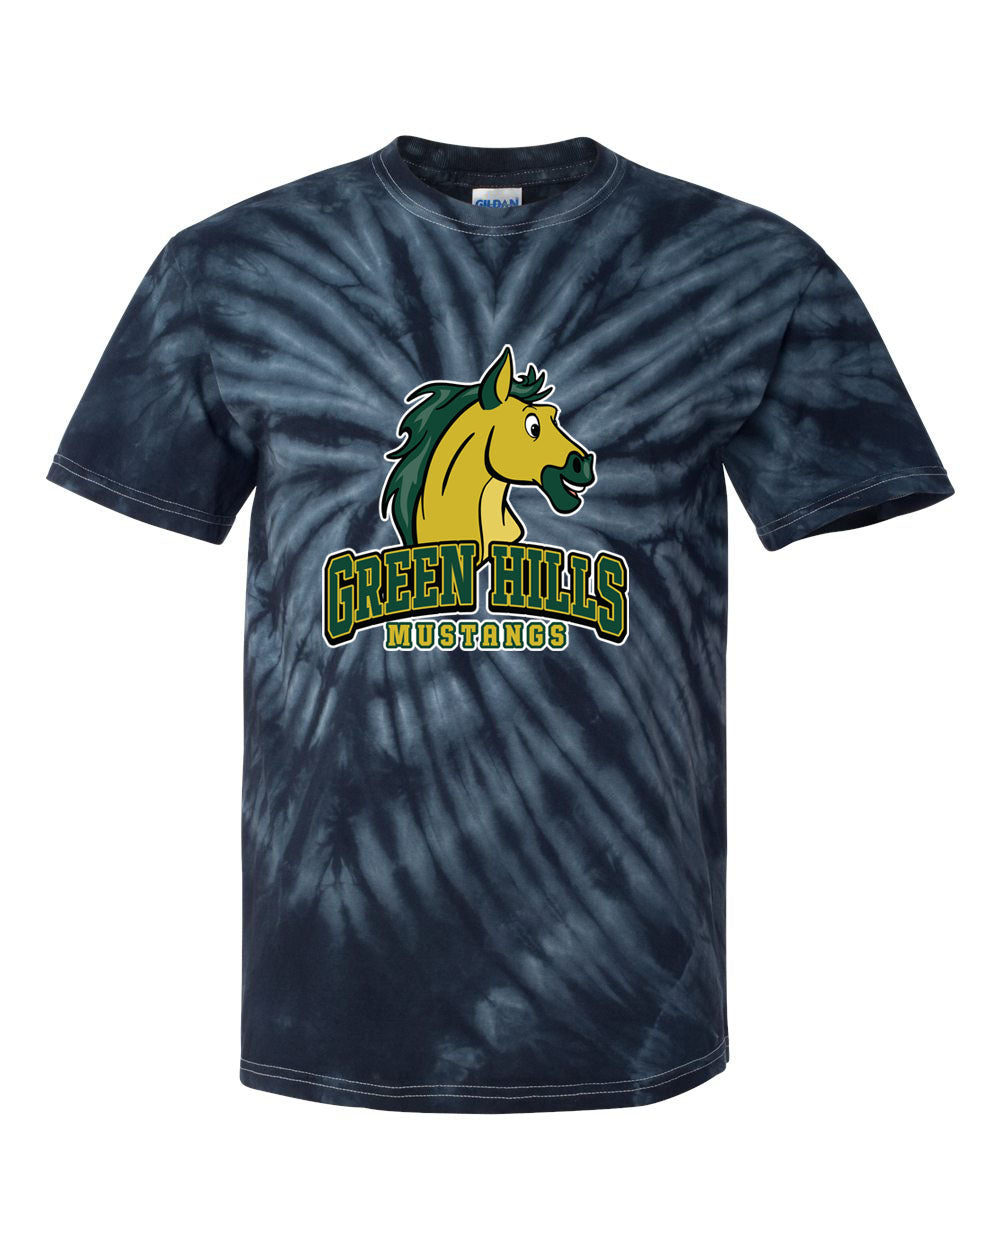 Green Hills Tie Dye t-shirt Design 14